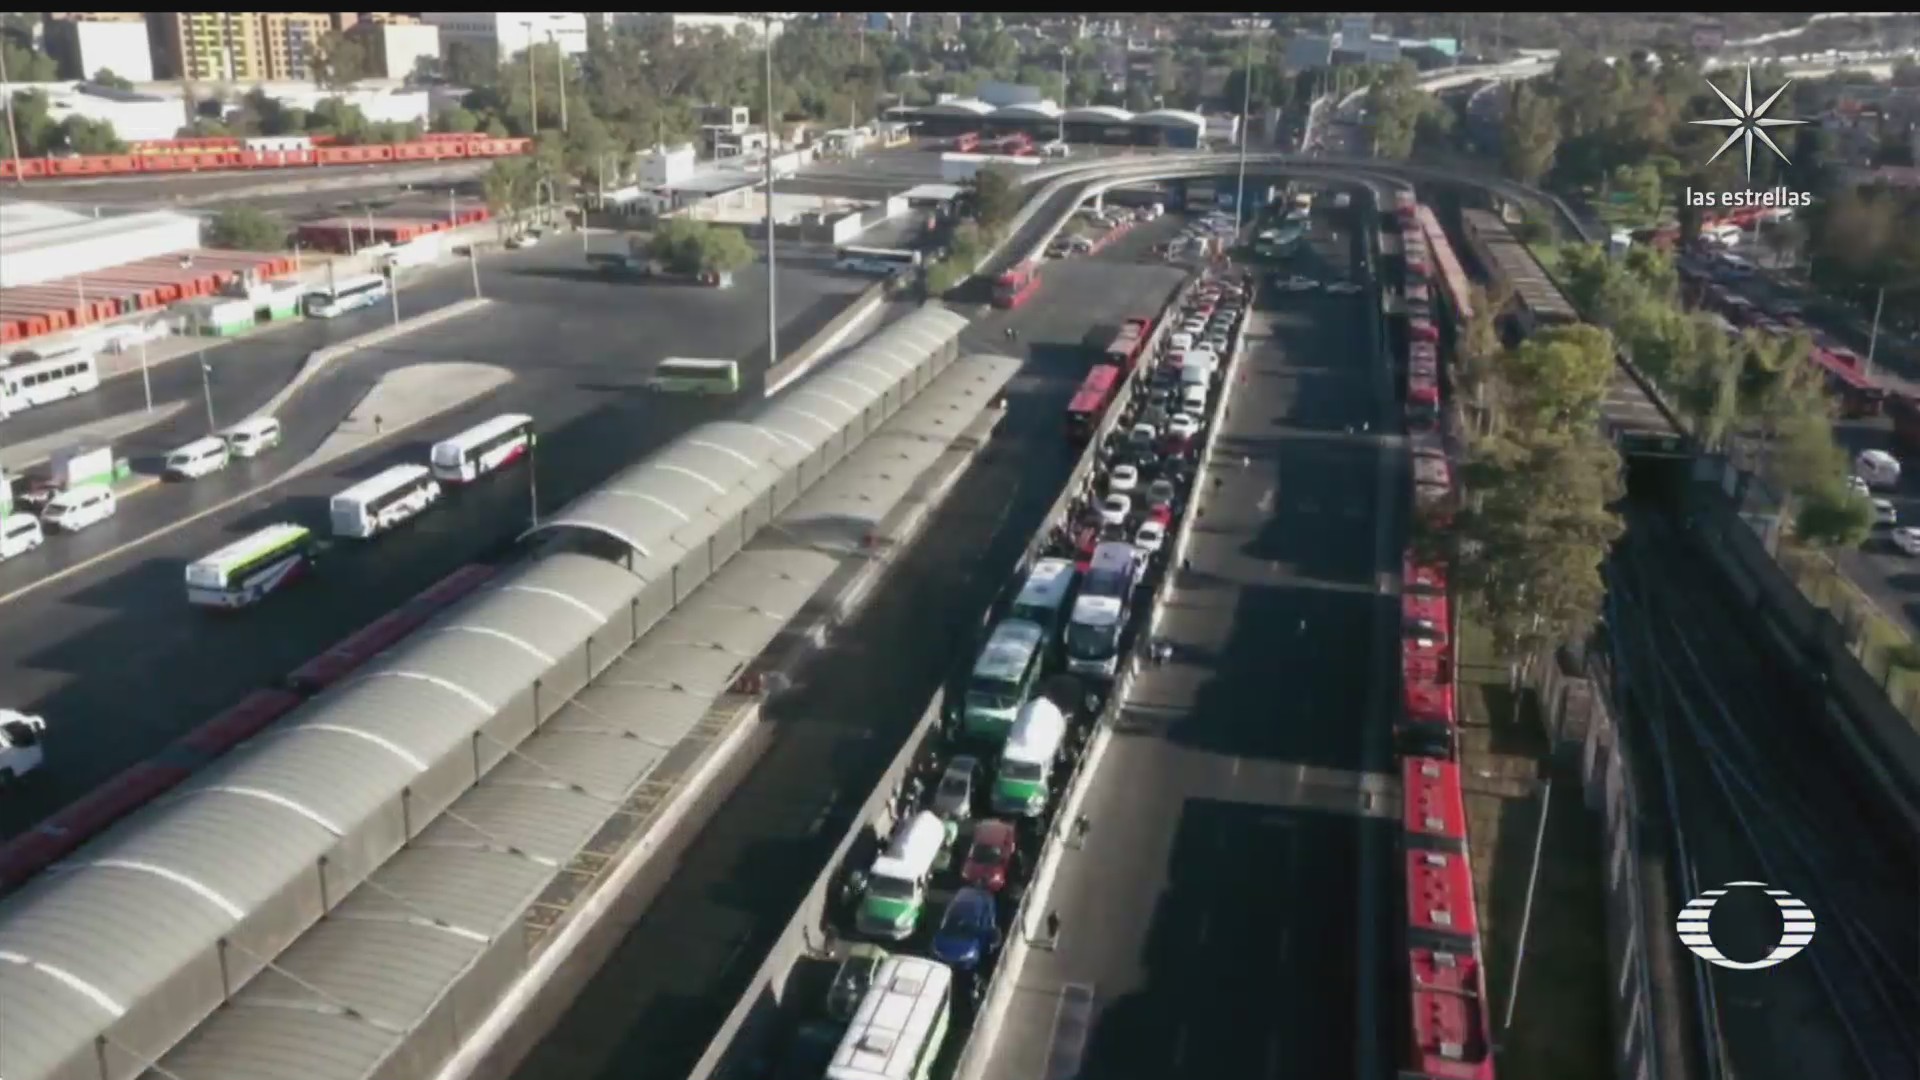 caos por bloqueo de transportistas en cdmx miles de personas afectadas